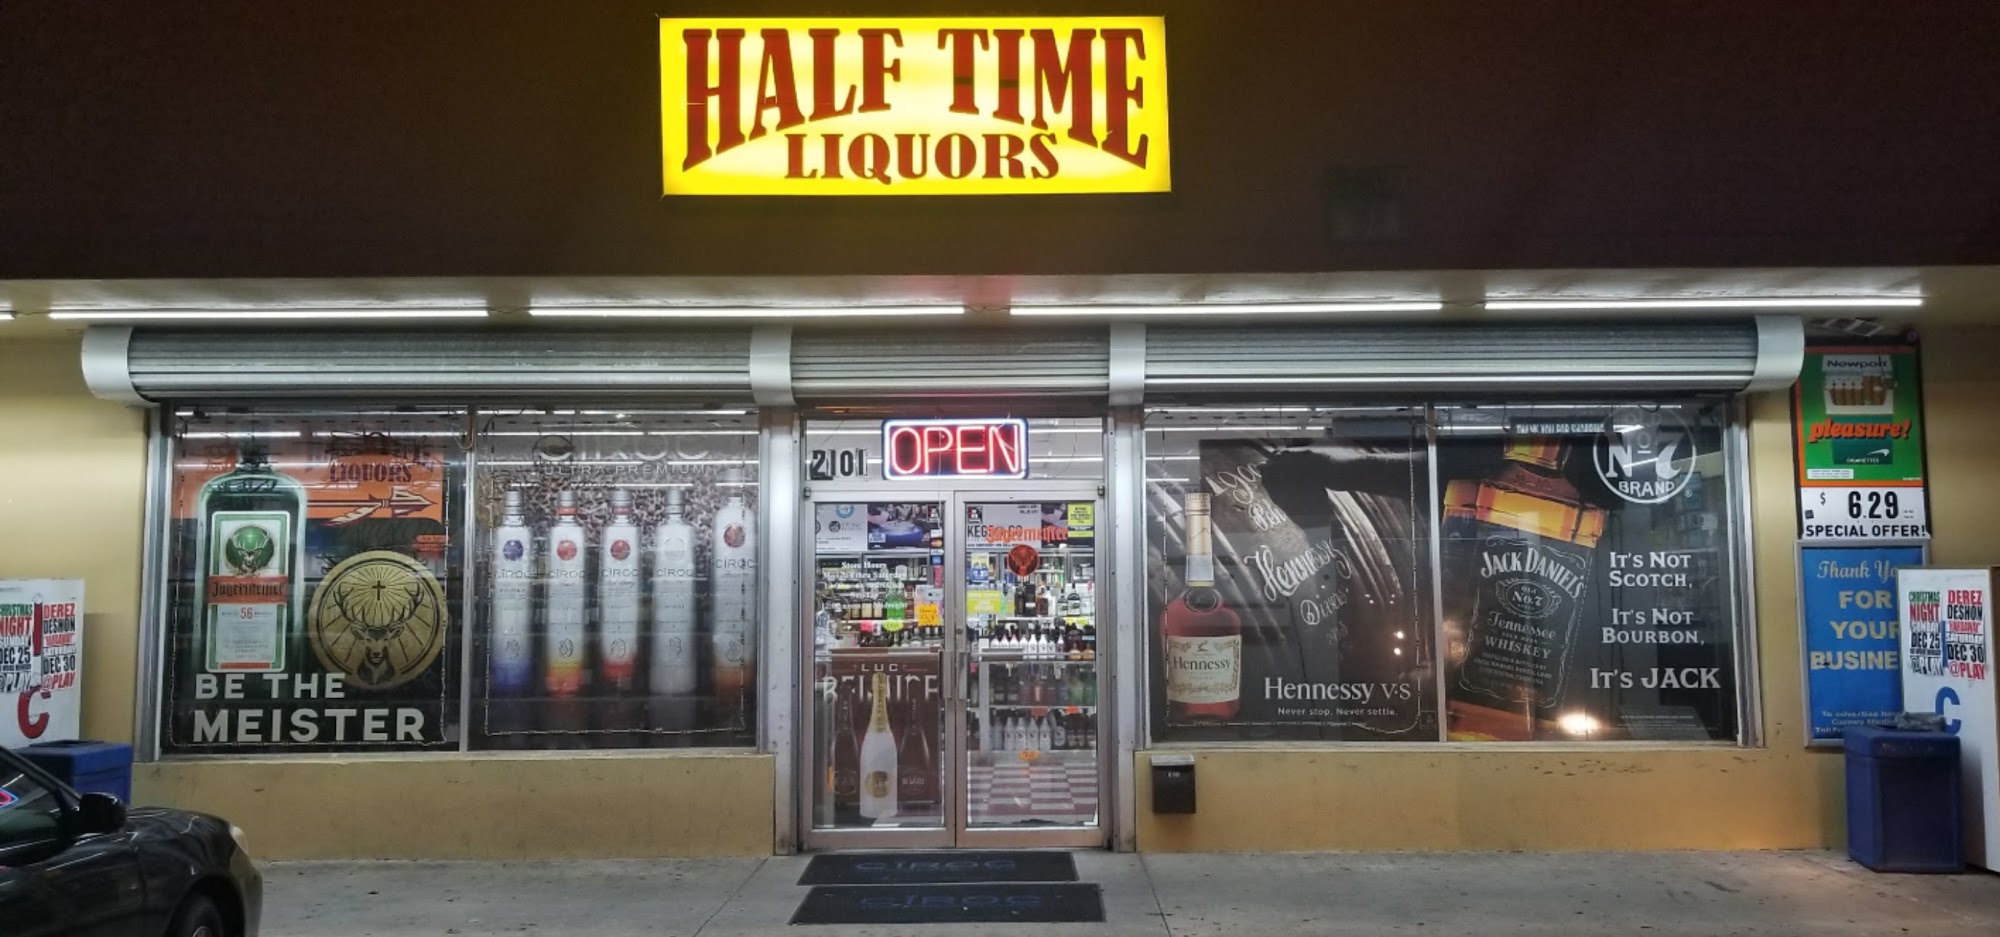 Half Time Liquors